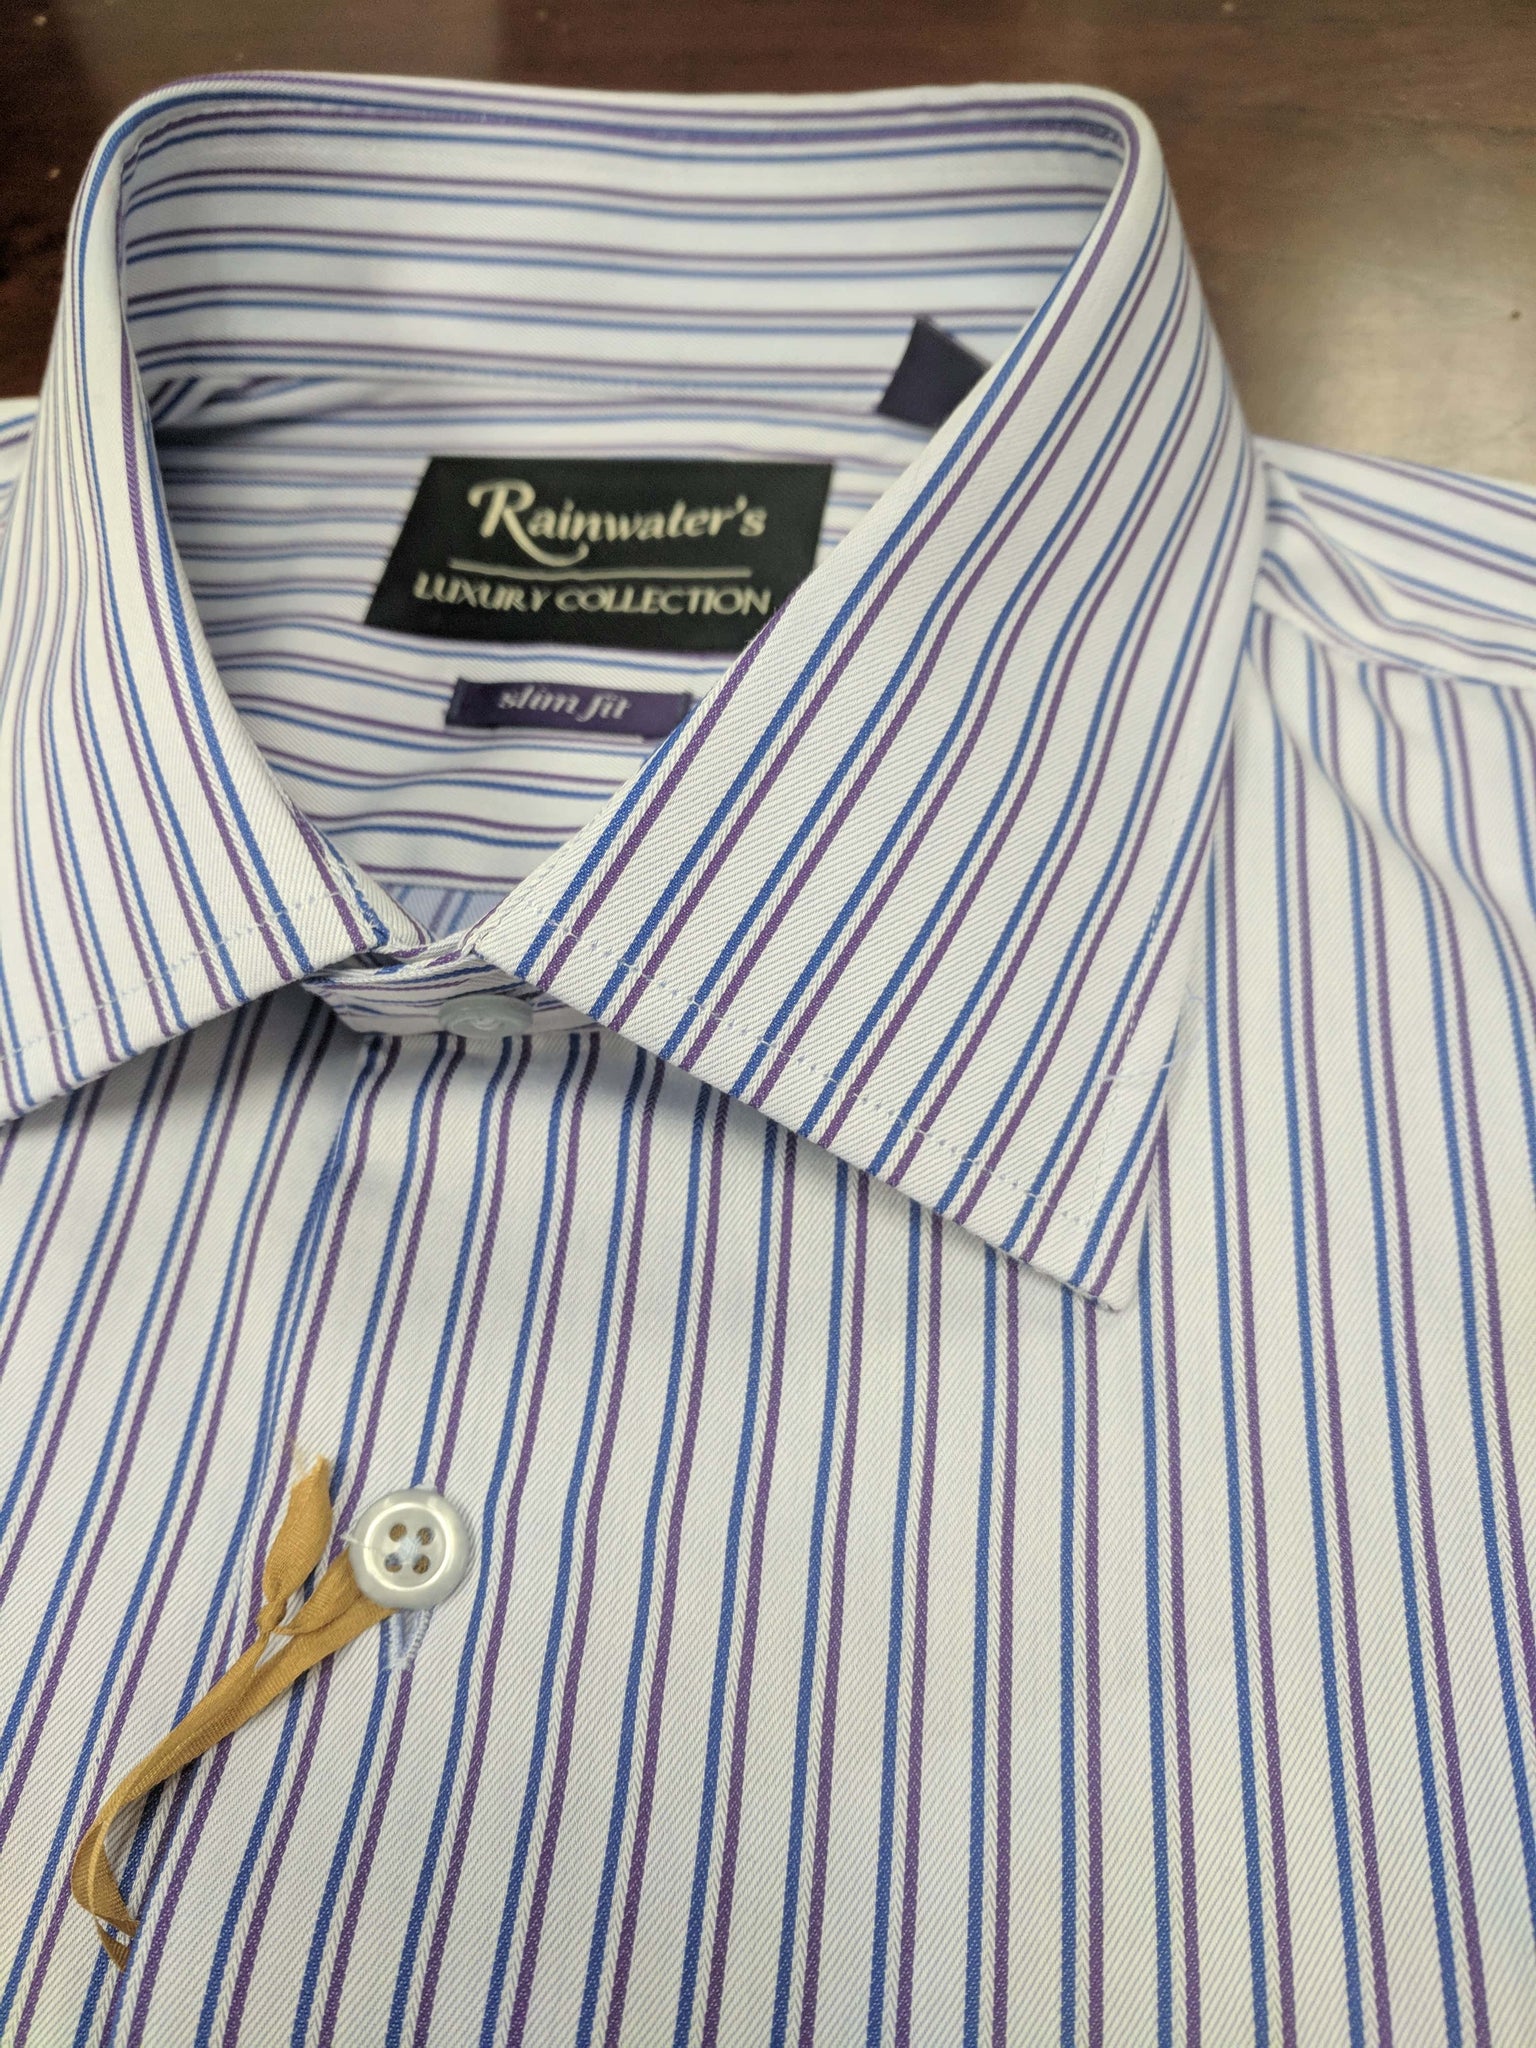 Cotton Blue Stripe 100% Cotton Slim Fit Dress Shirt - Rainwater's Men's Clothing and Tuxedo Rental